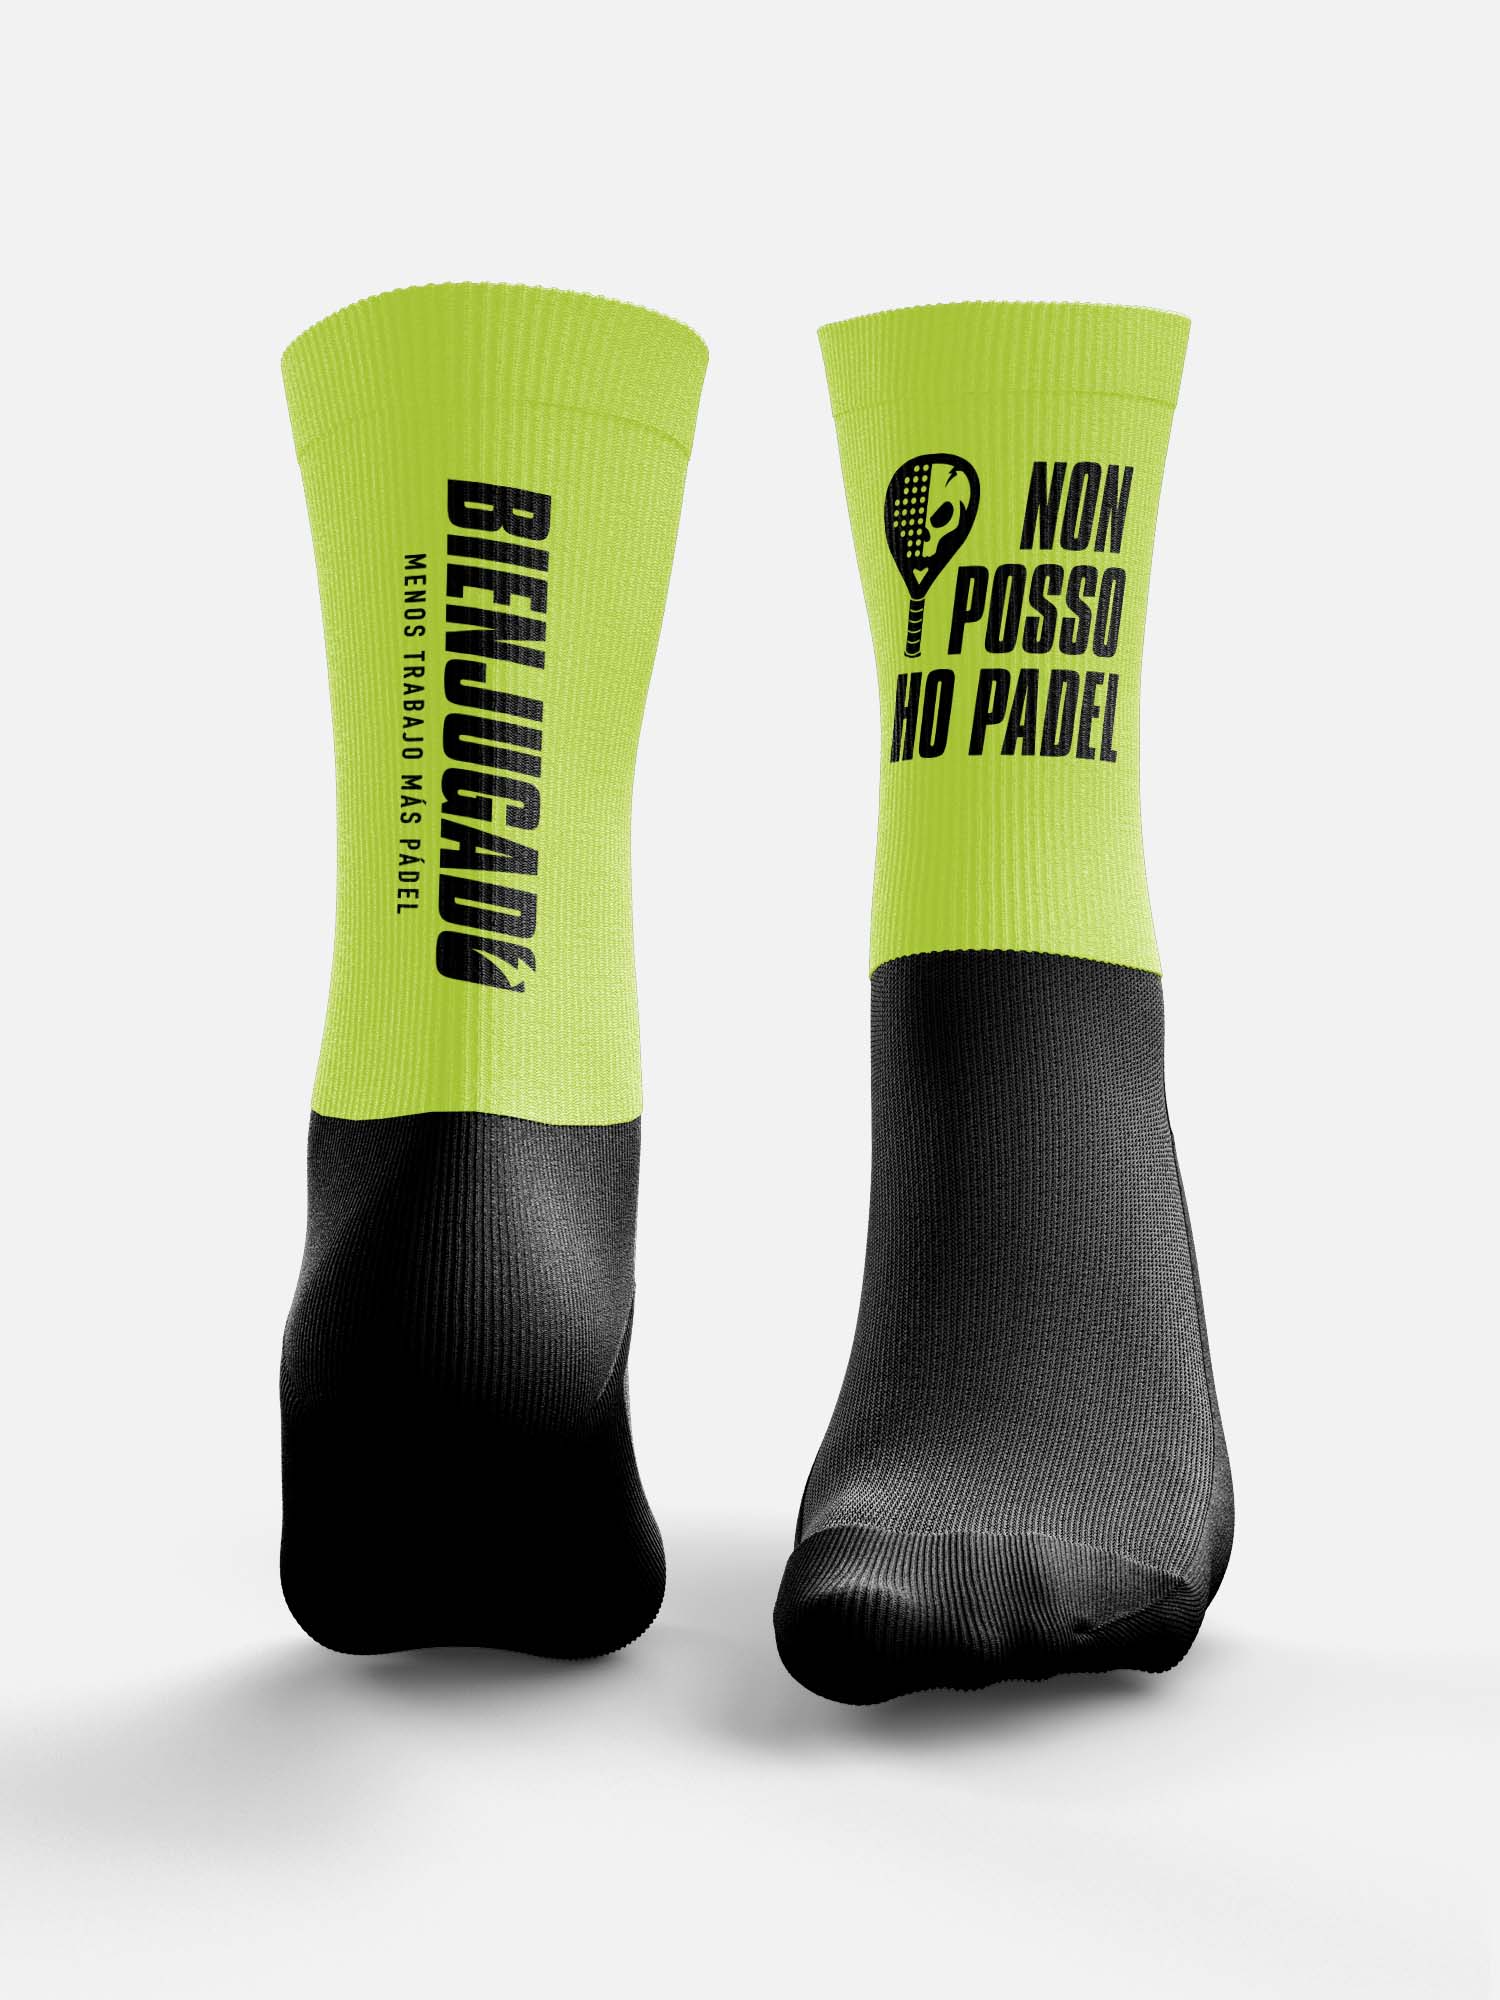 Padel Fun Socks - I Can't Ho Padel